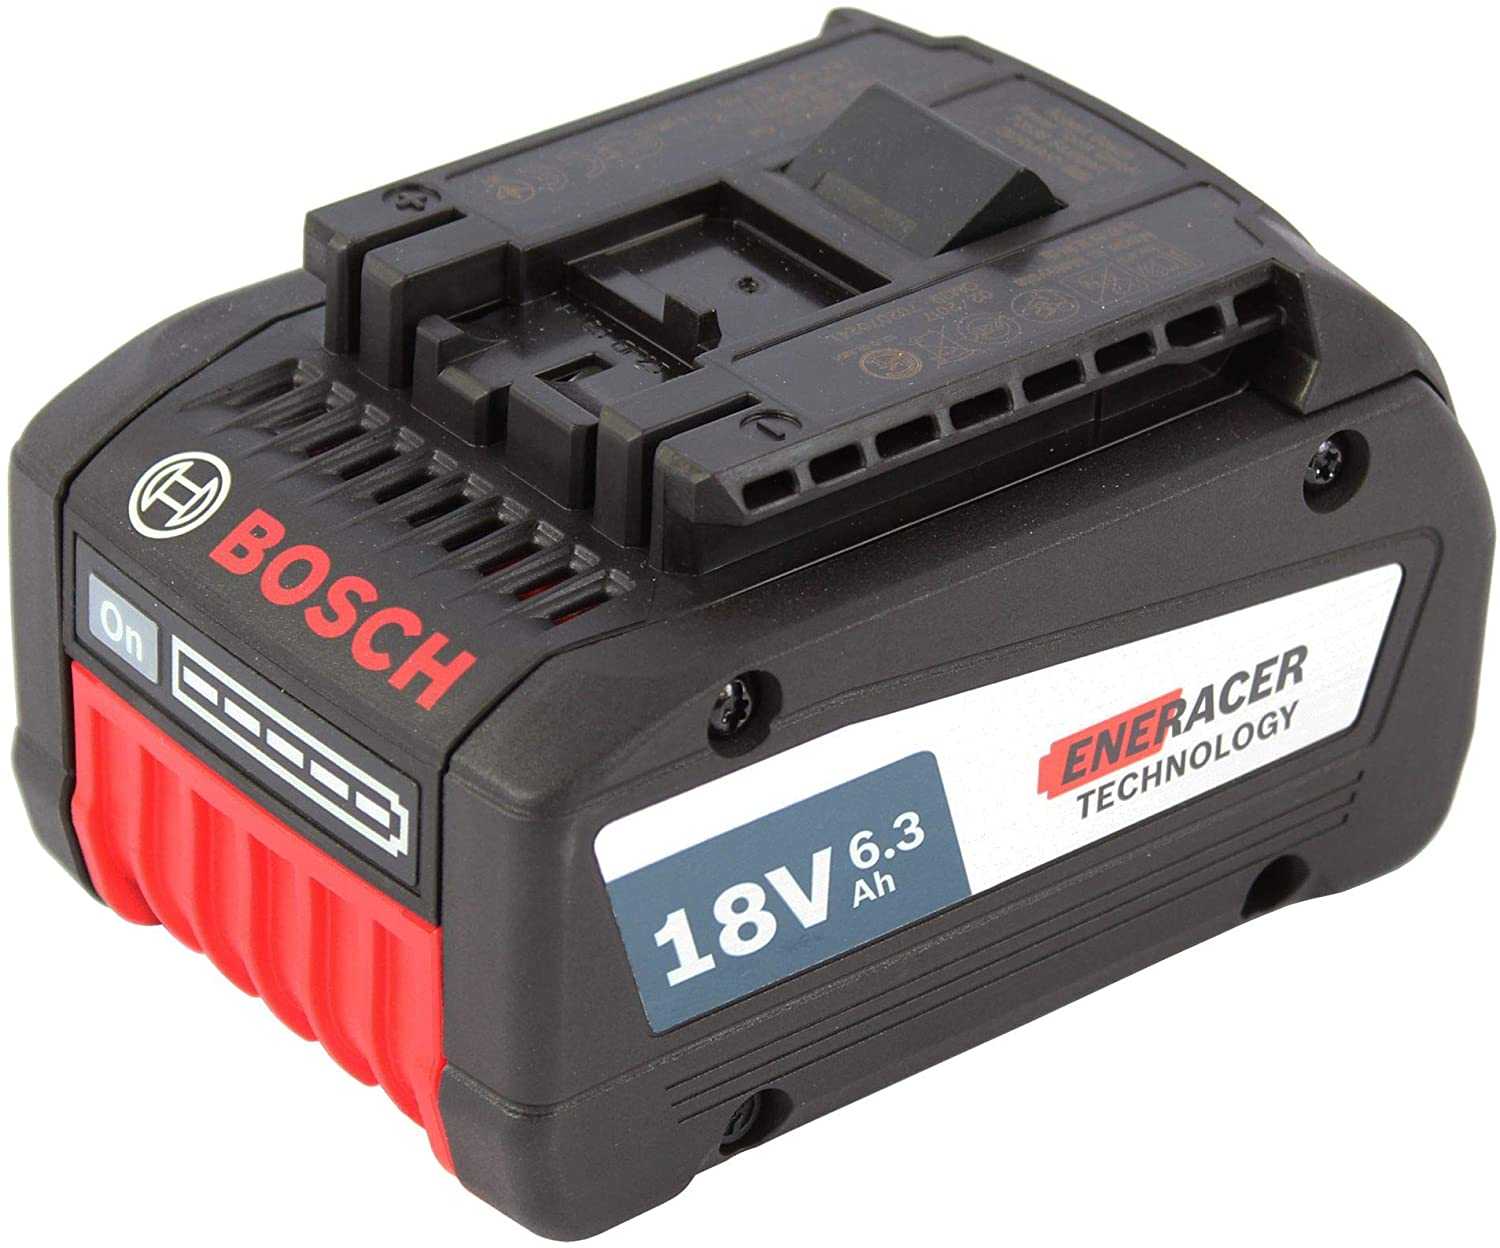 Bosch 6.3 Ah Battery GBA 18 V Li-ion Eneracer Technology 1600A00R1A